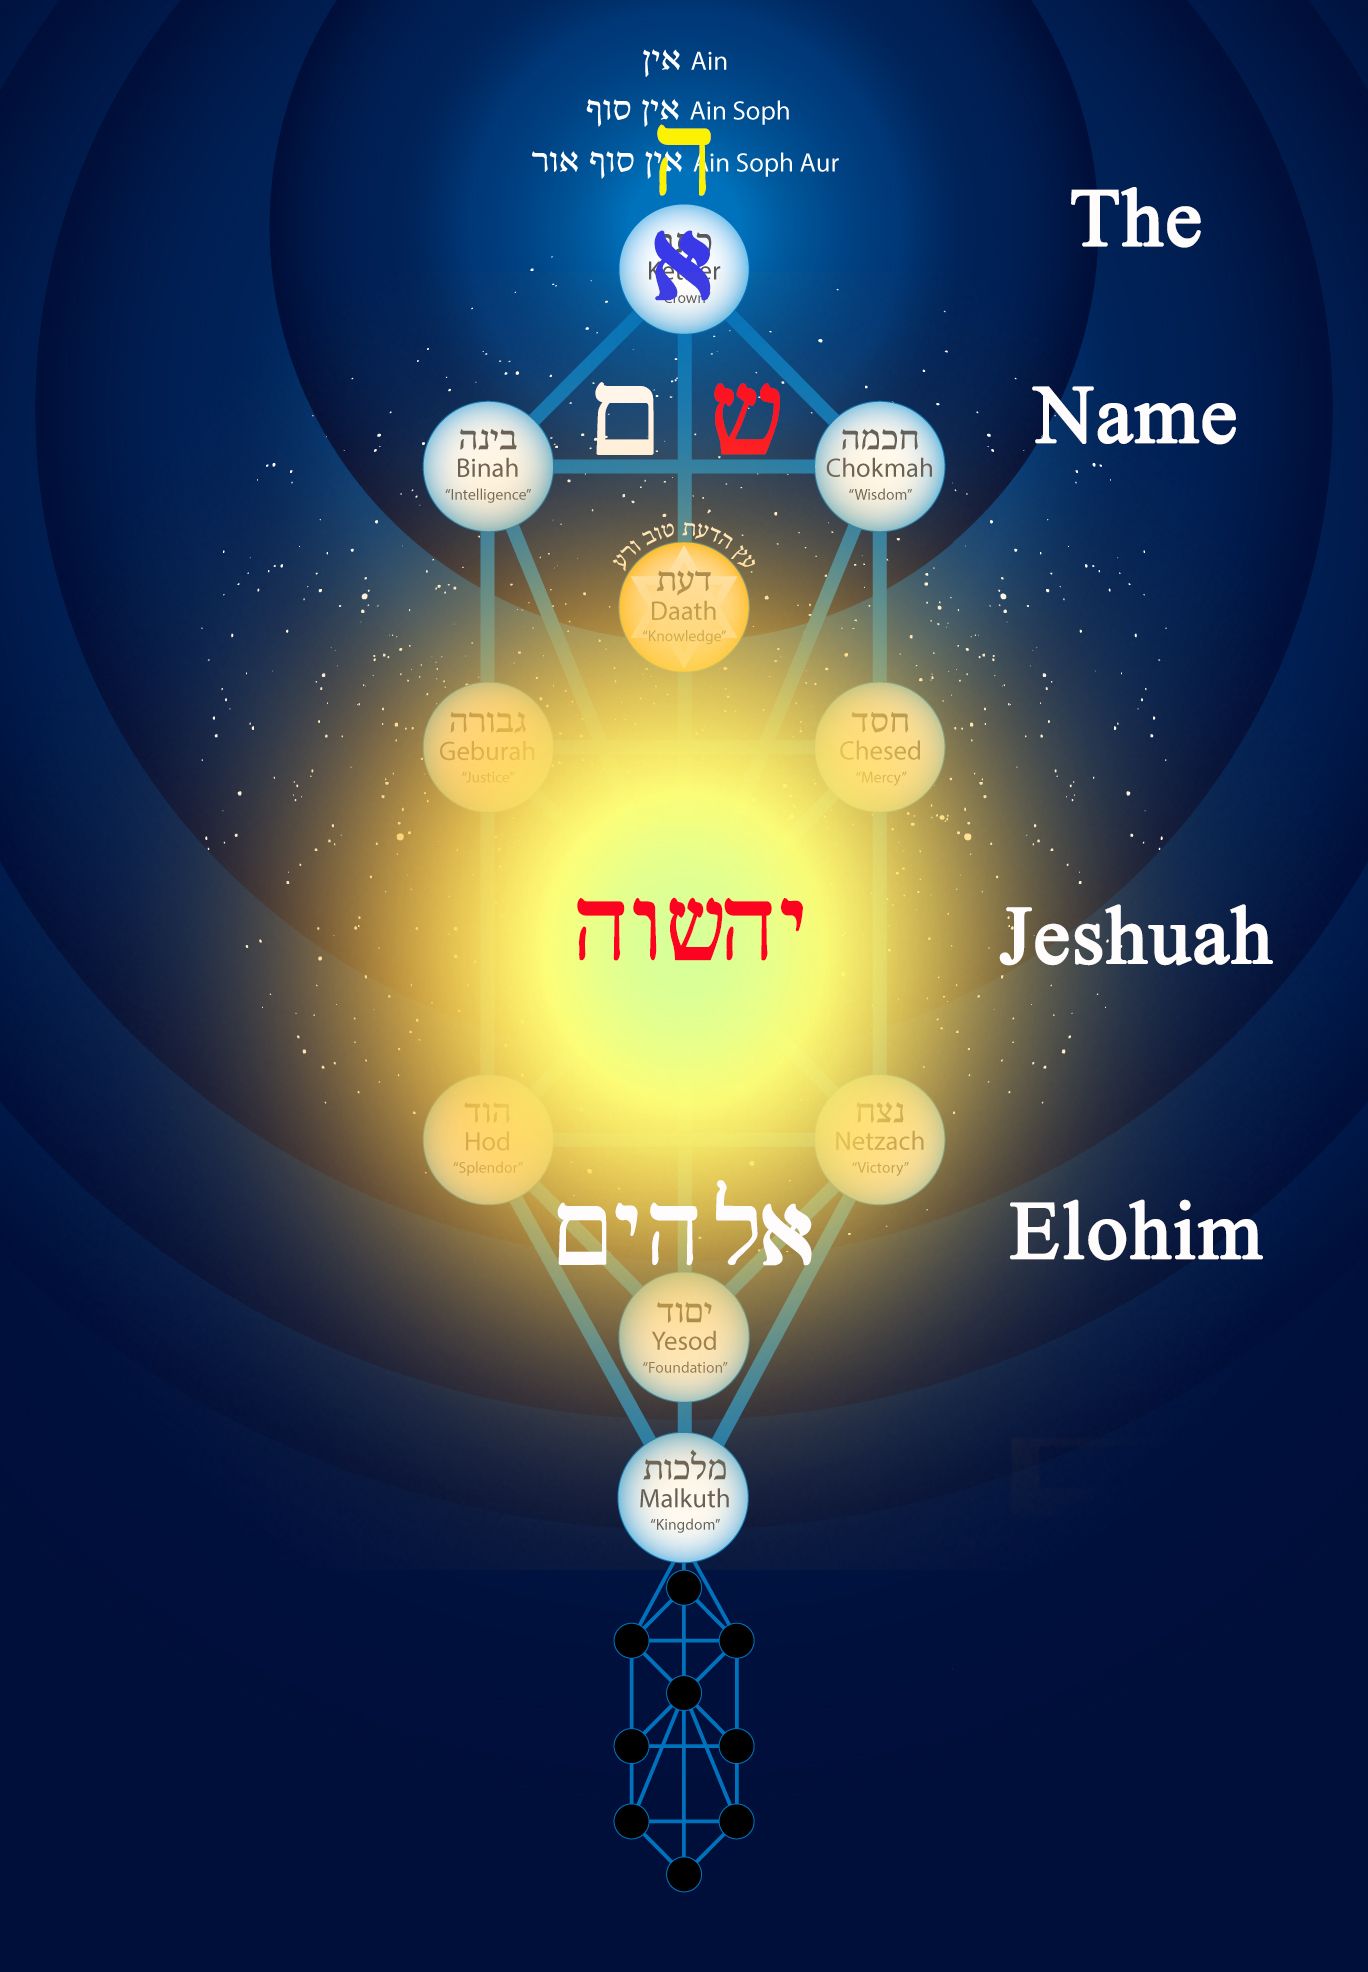 The Name Yeshuah Elohim